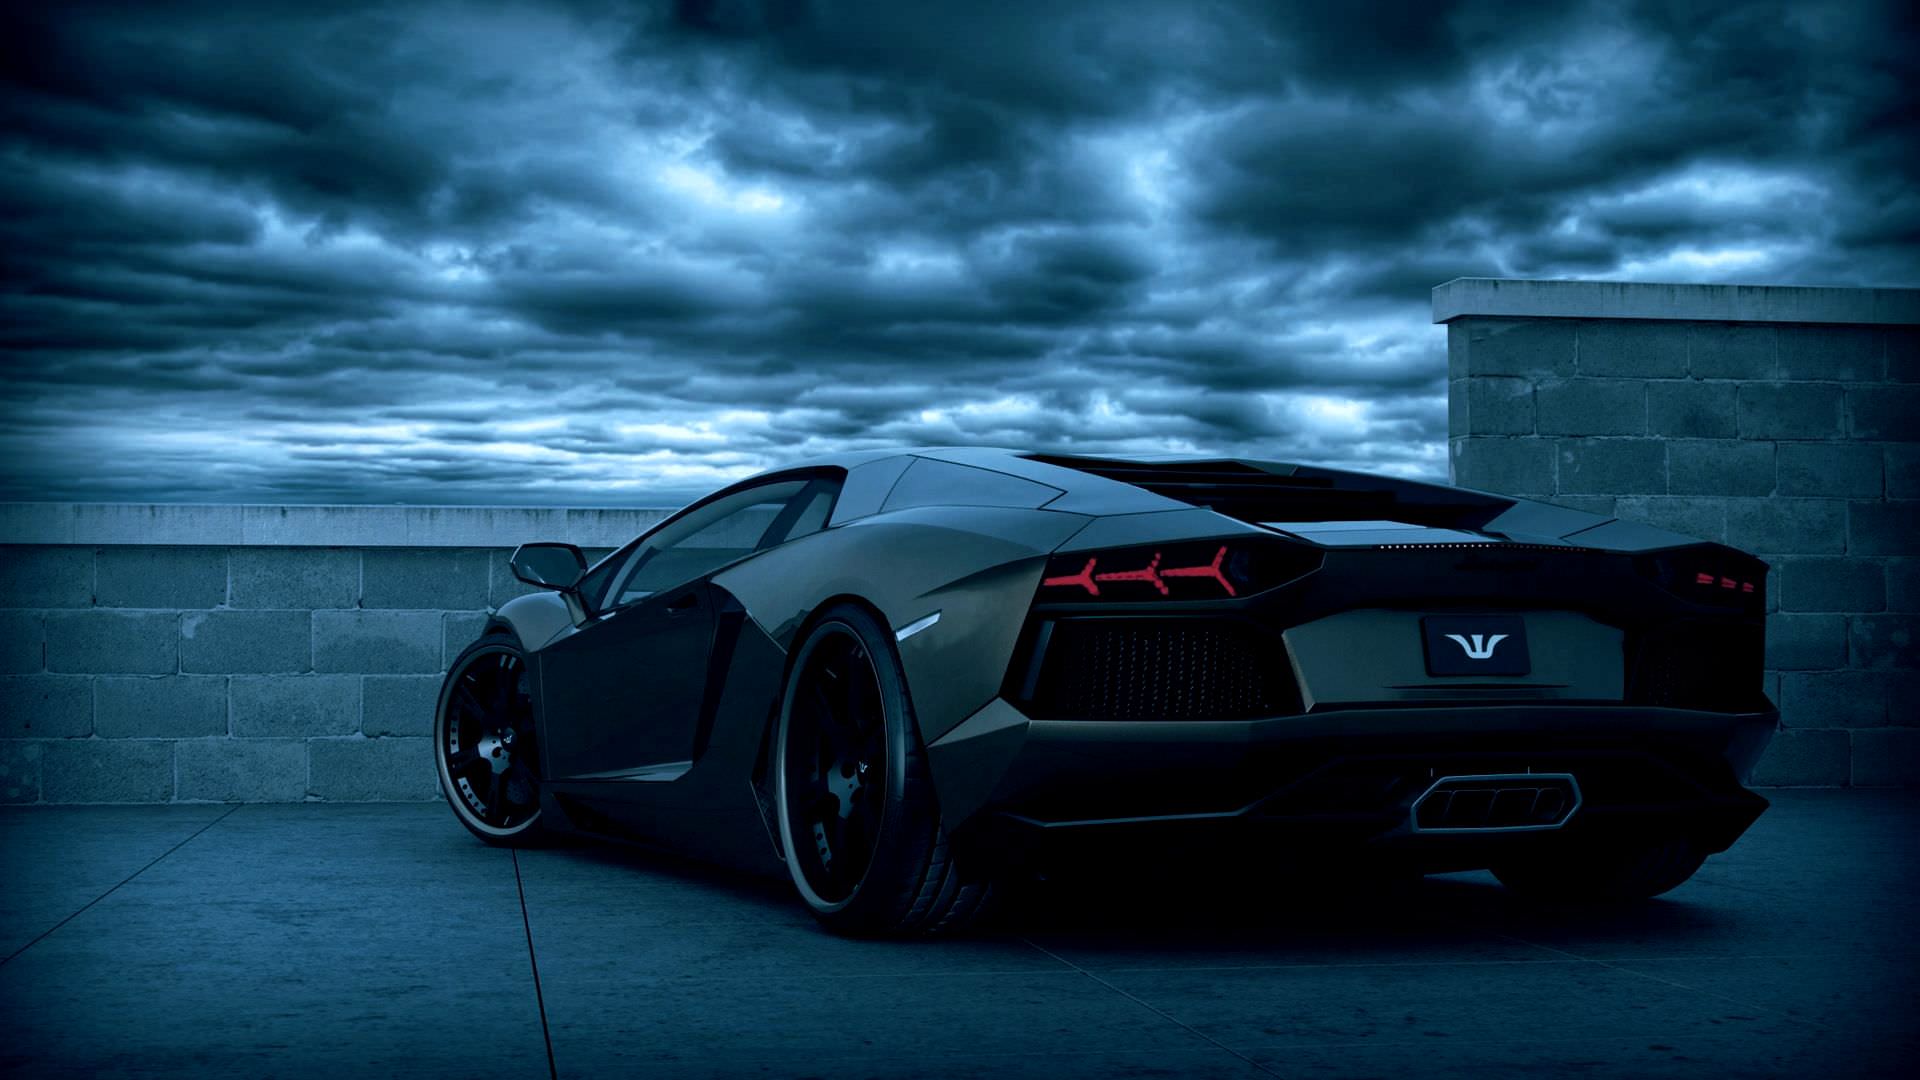 Cool Black Lamborghini Wallpaper HD. Wonderful Wallpaper Picture